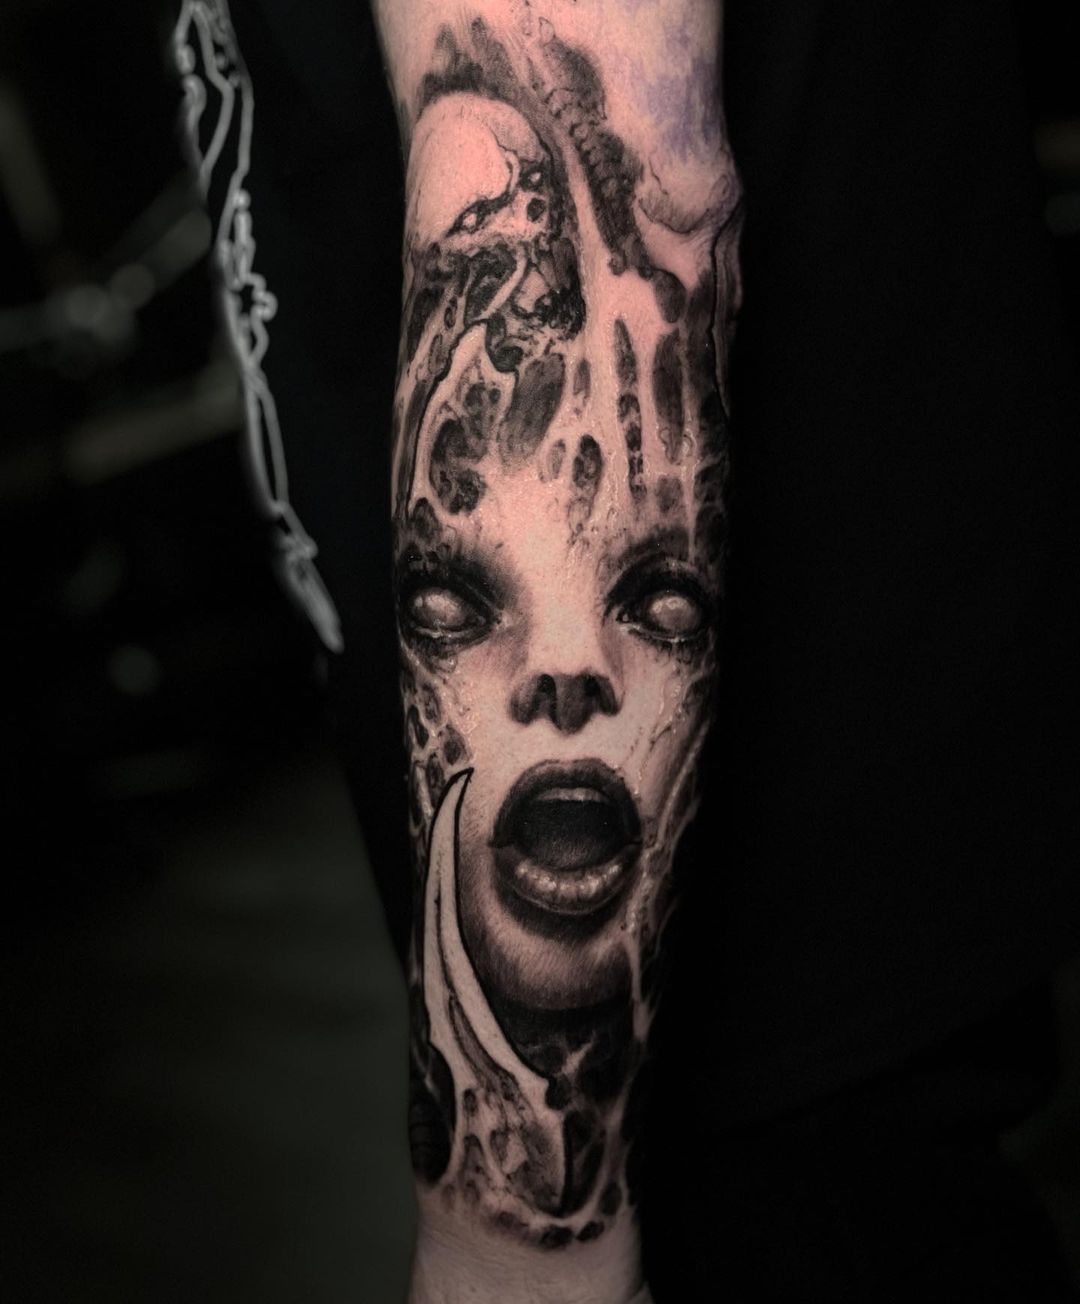 Dark Metal Tattoos - By victor perez | Facebook